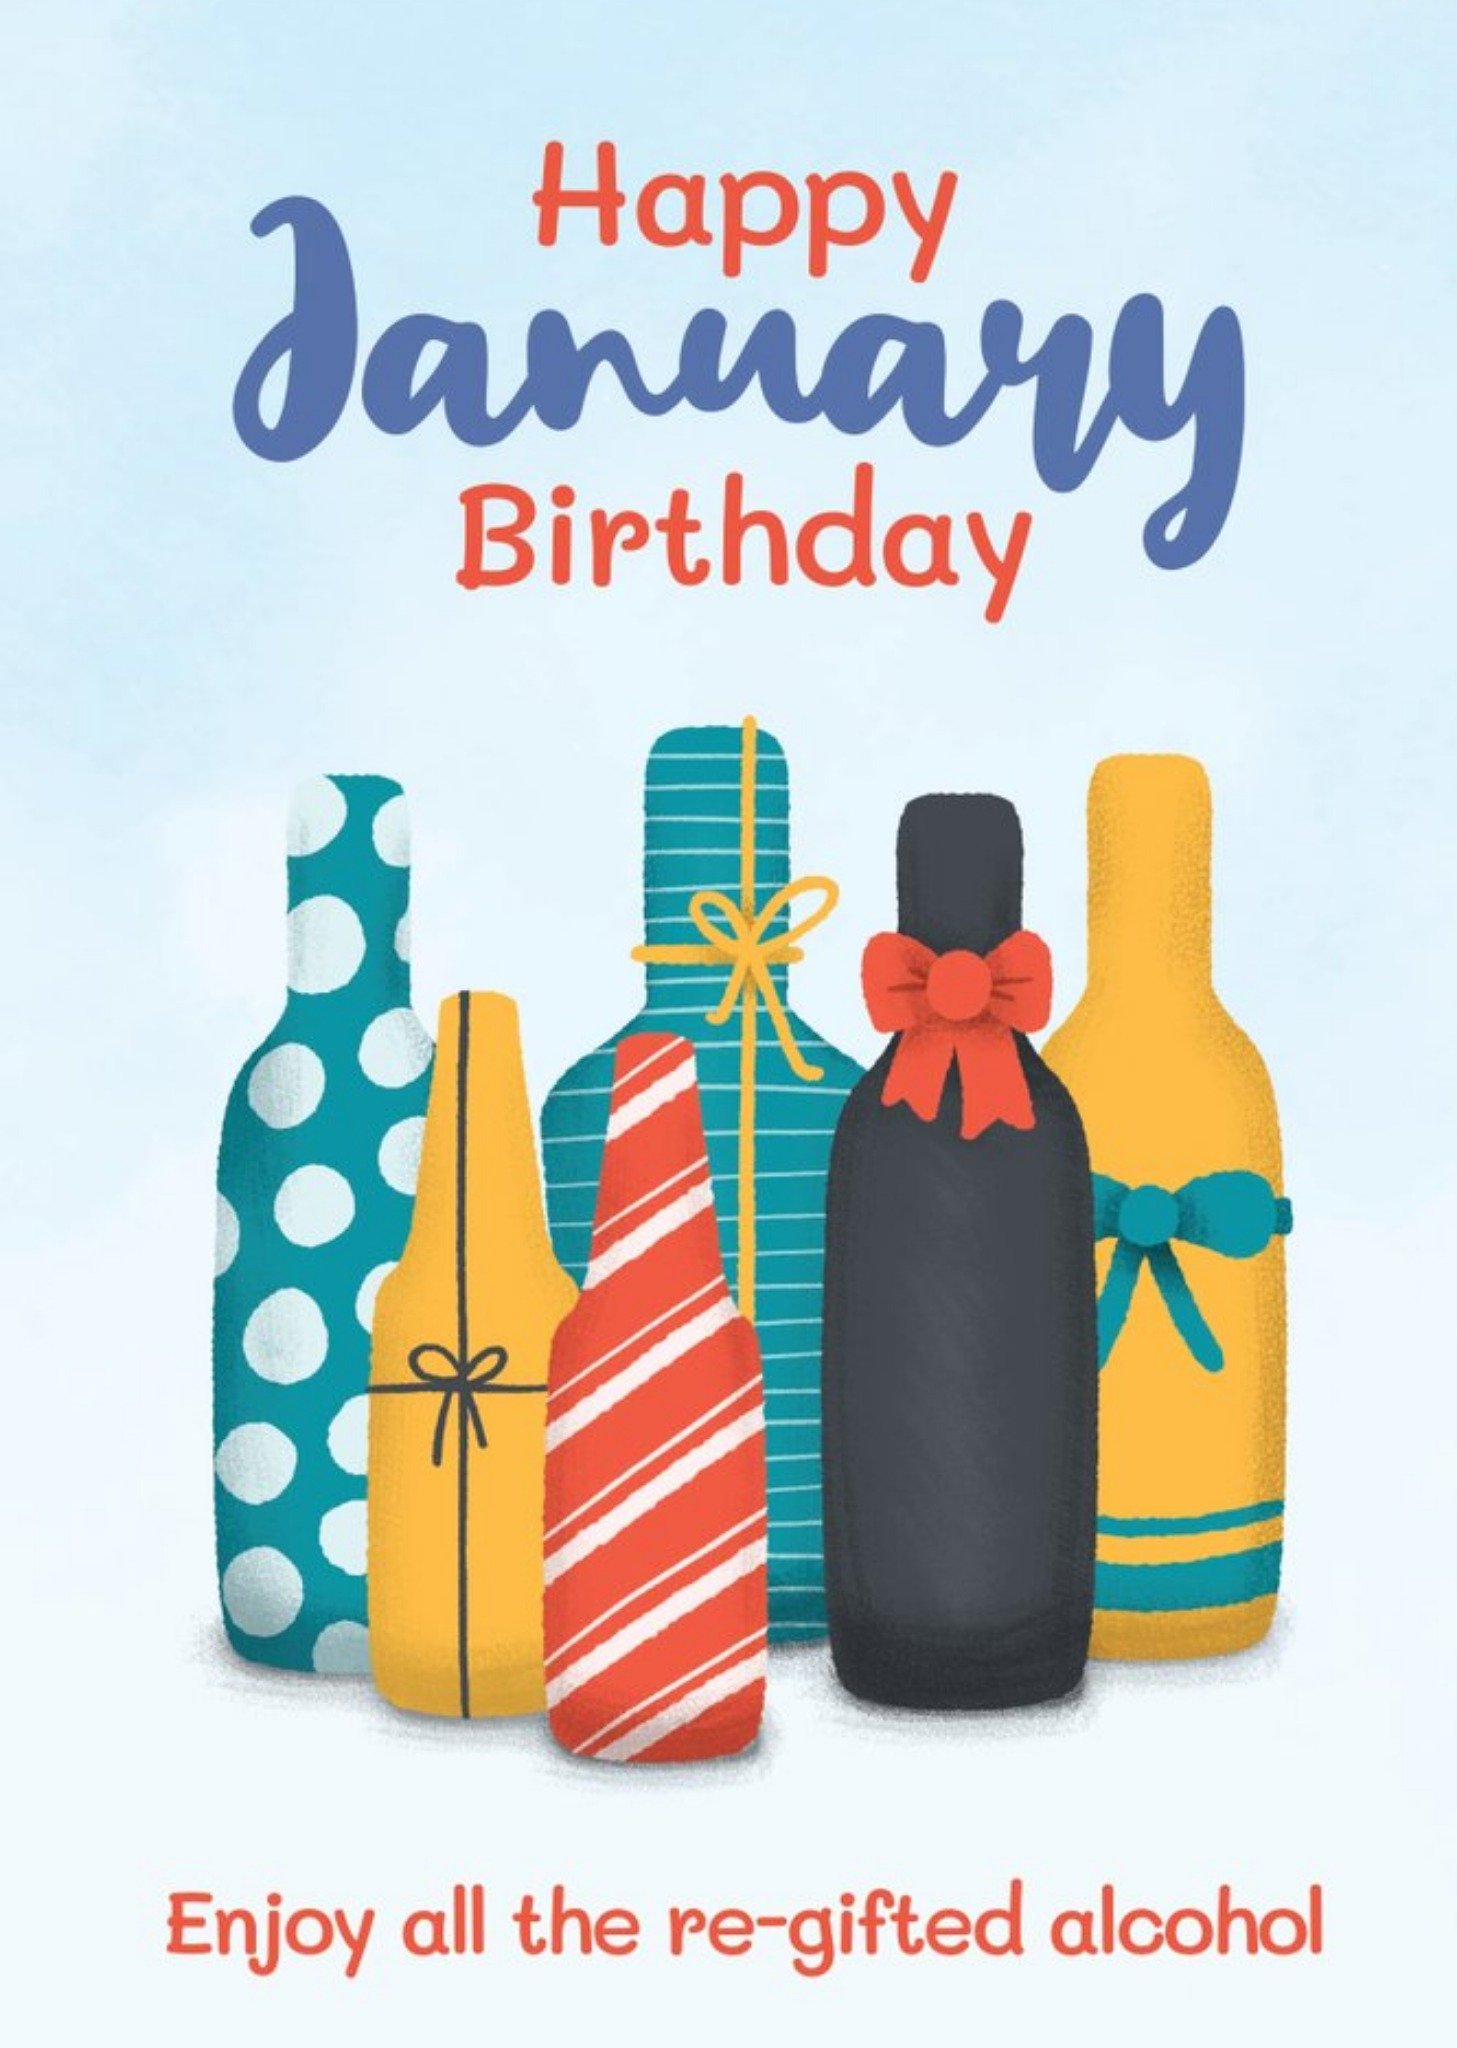 Moonpig Illustration Of Individually Wrapped Bottles Of Alcohol Happy January Birthday Card, Large